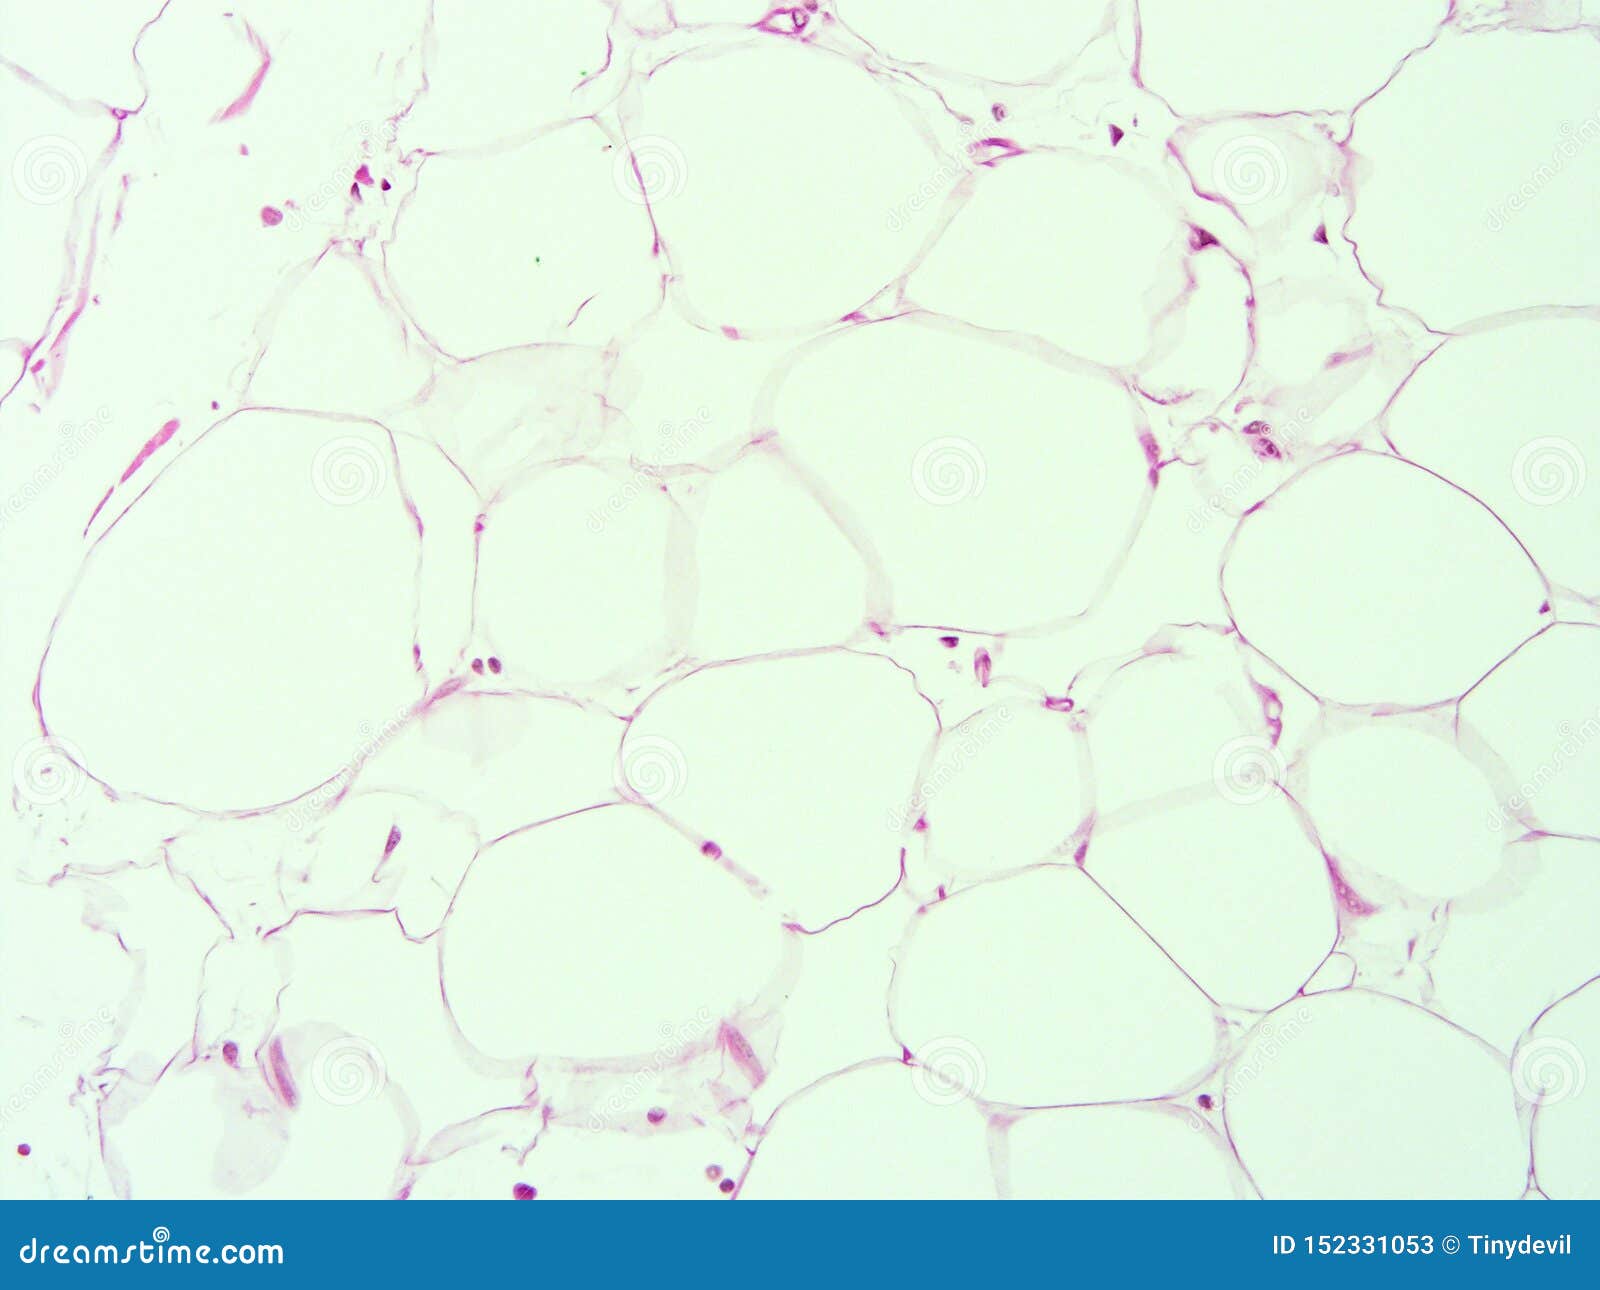 histology of human adipose tissue